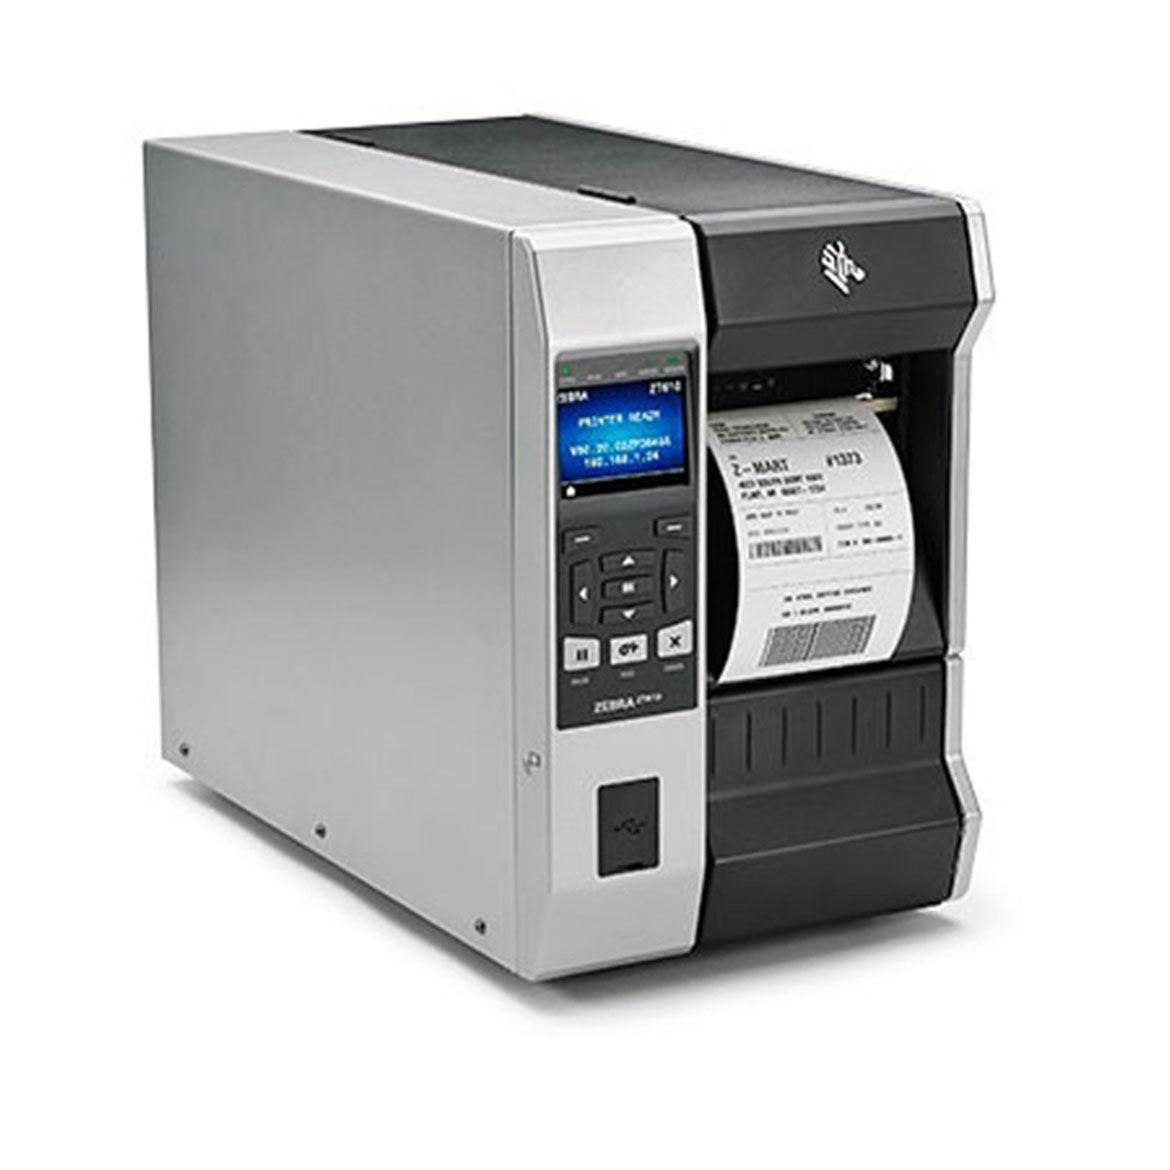 Zebra ZT600 Series Label Printers